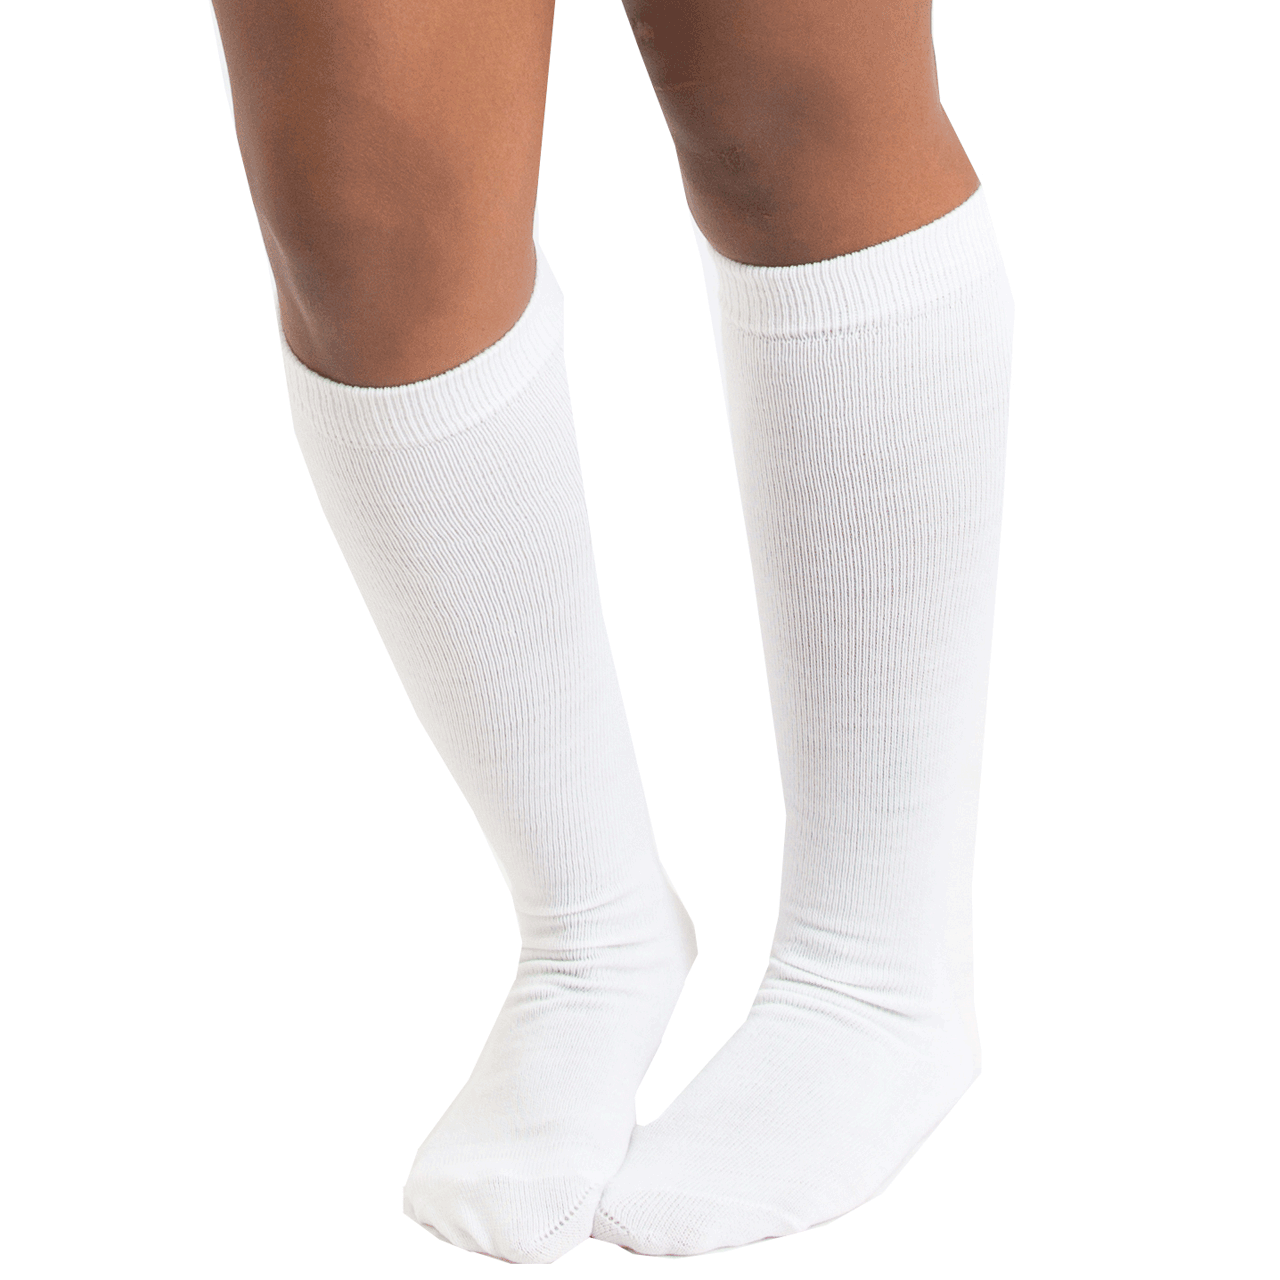 Thin Solid White Knee High Socks